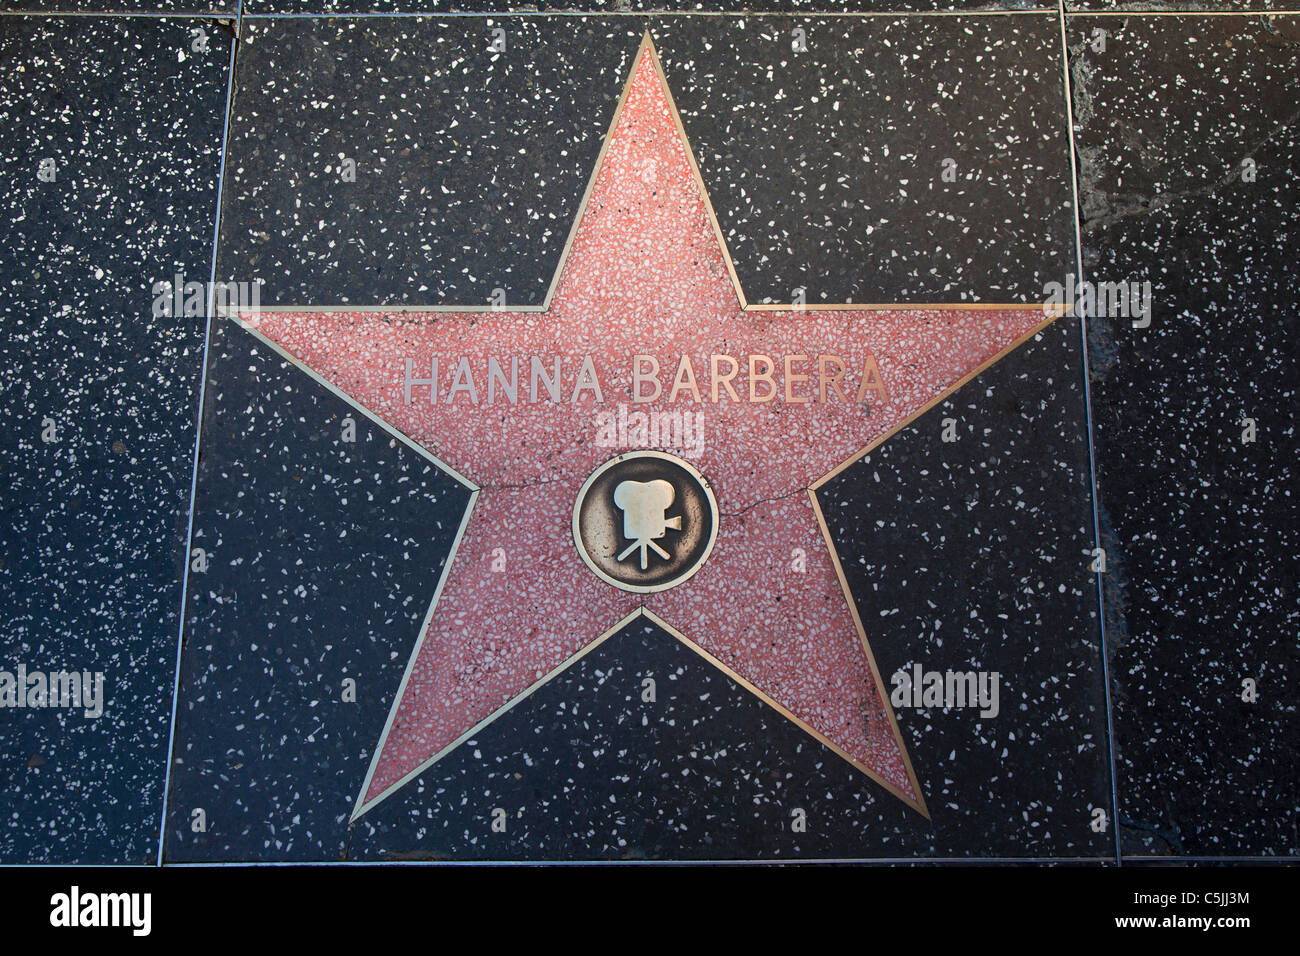 Hanna Barbera star at the Hollywood Walk of Fame, Los Angeles, California, USA Stock Photo